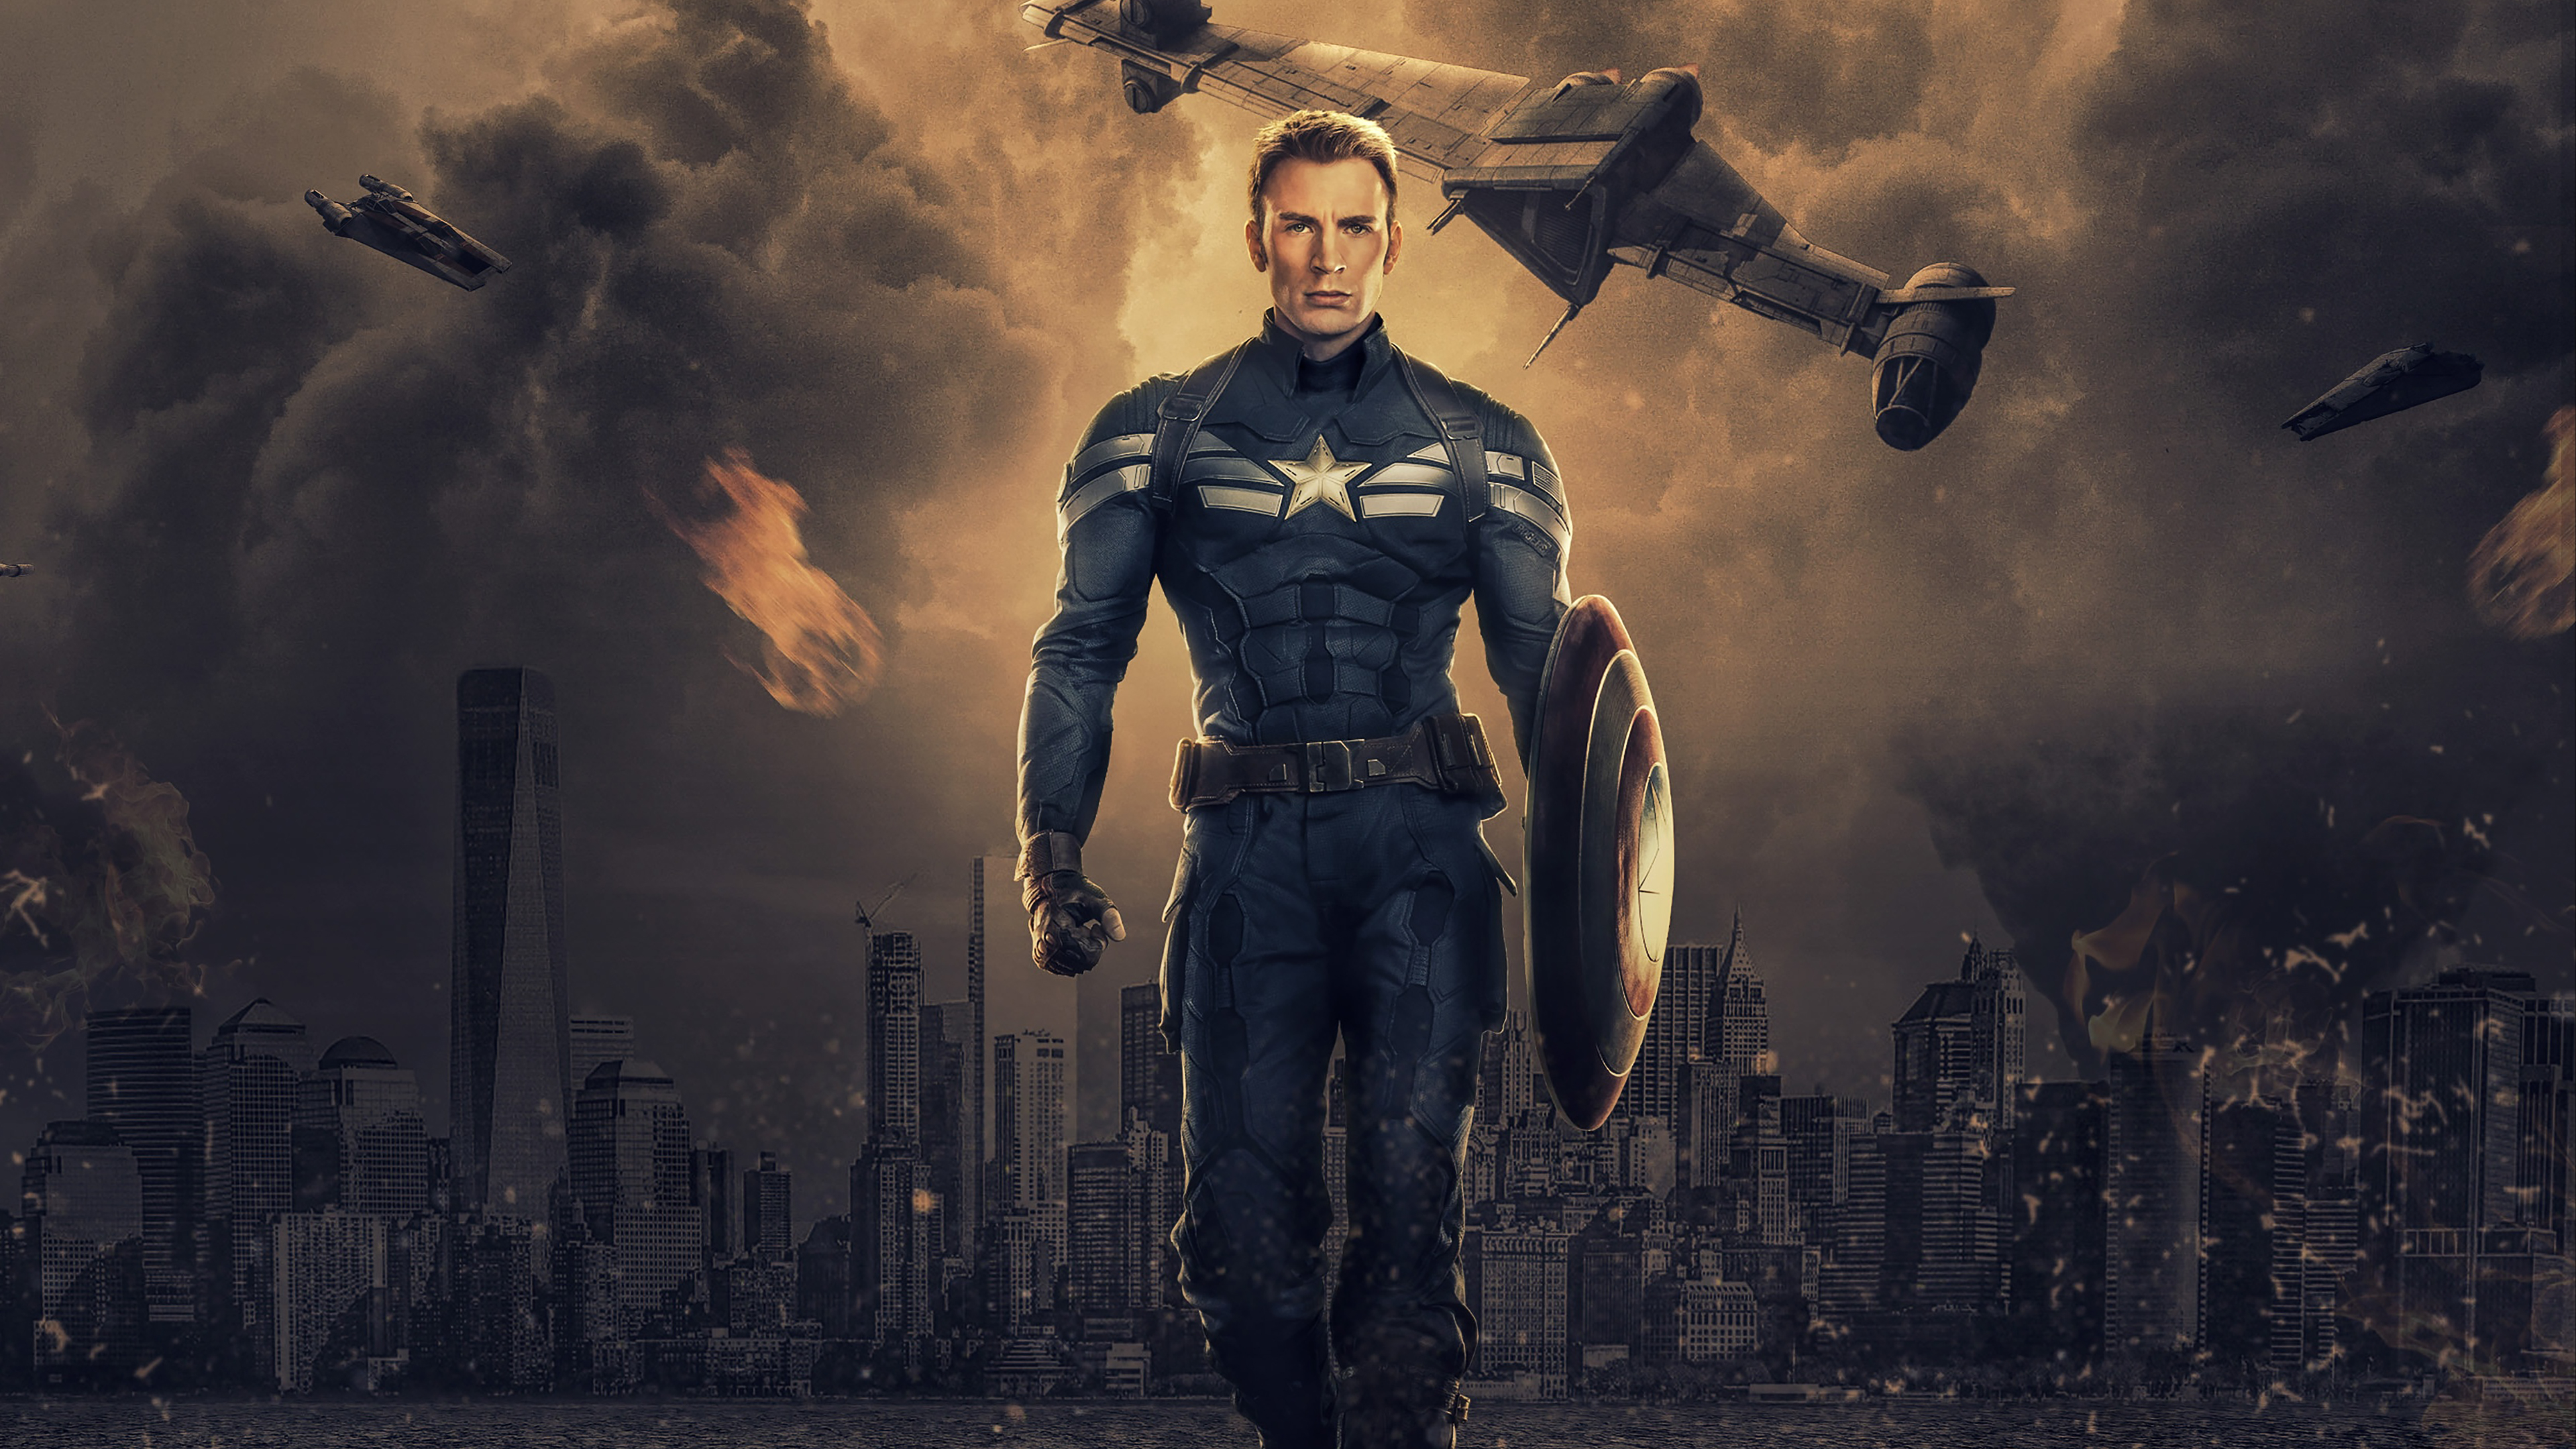 Captain America: The Winter Soldier 4k Ultra HD Wallpaper